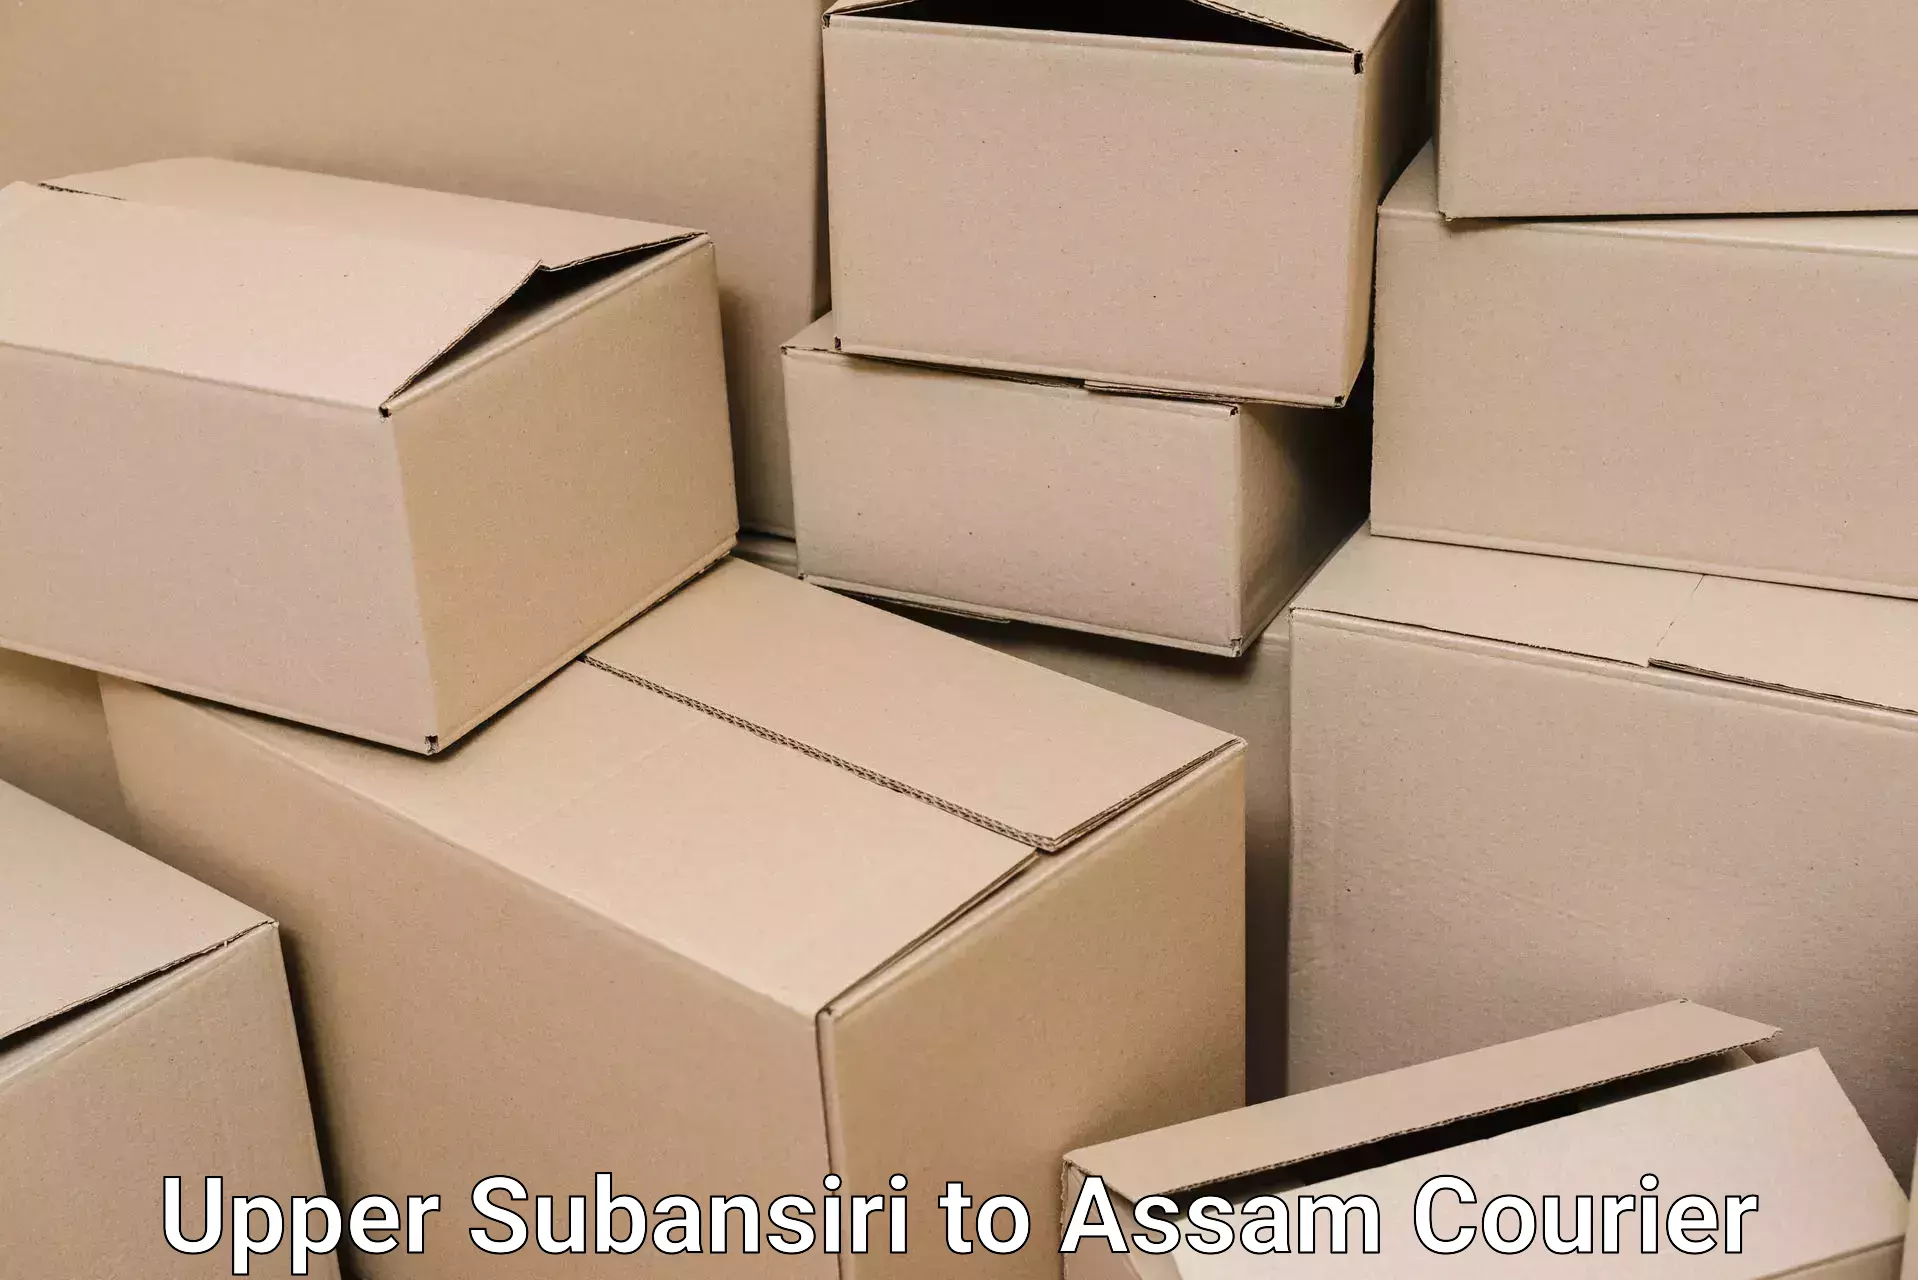 Moving and packing experts Upper Subansiri to Dhubri